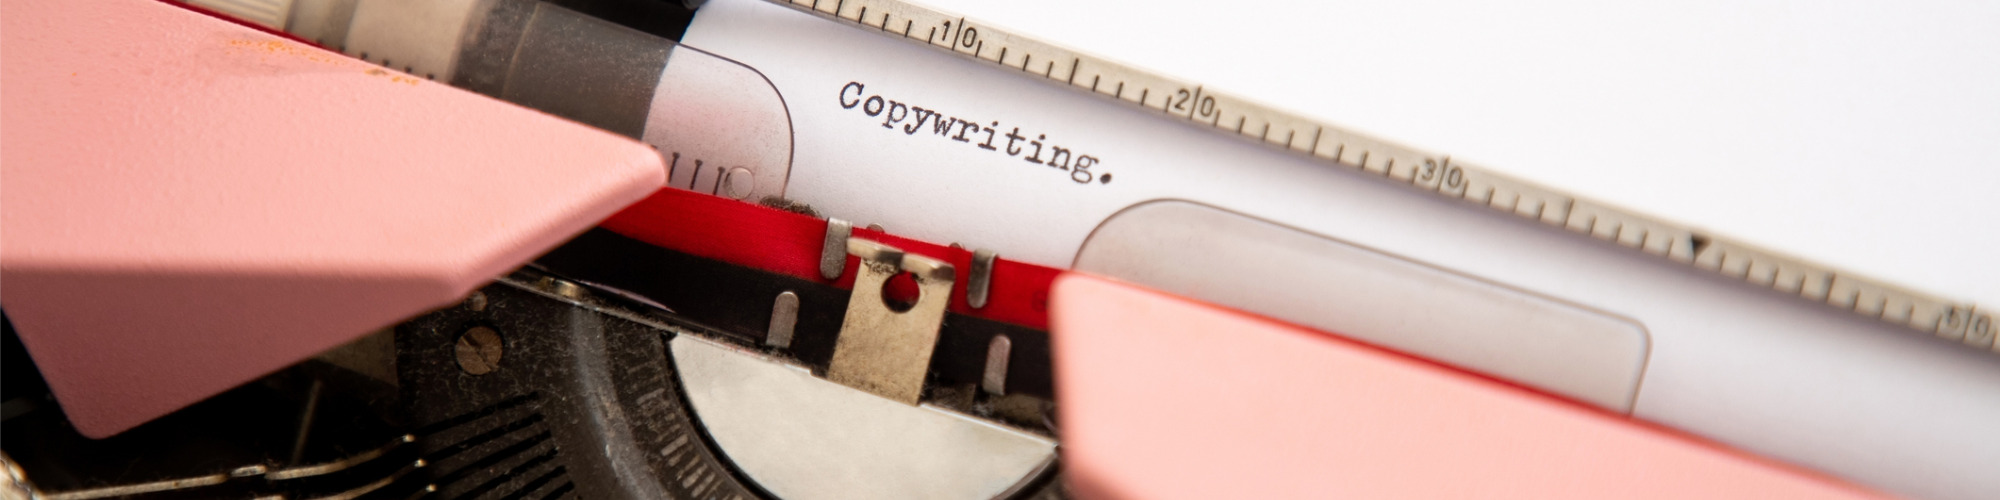 Copywriting Basics & AI for Content Writing